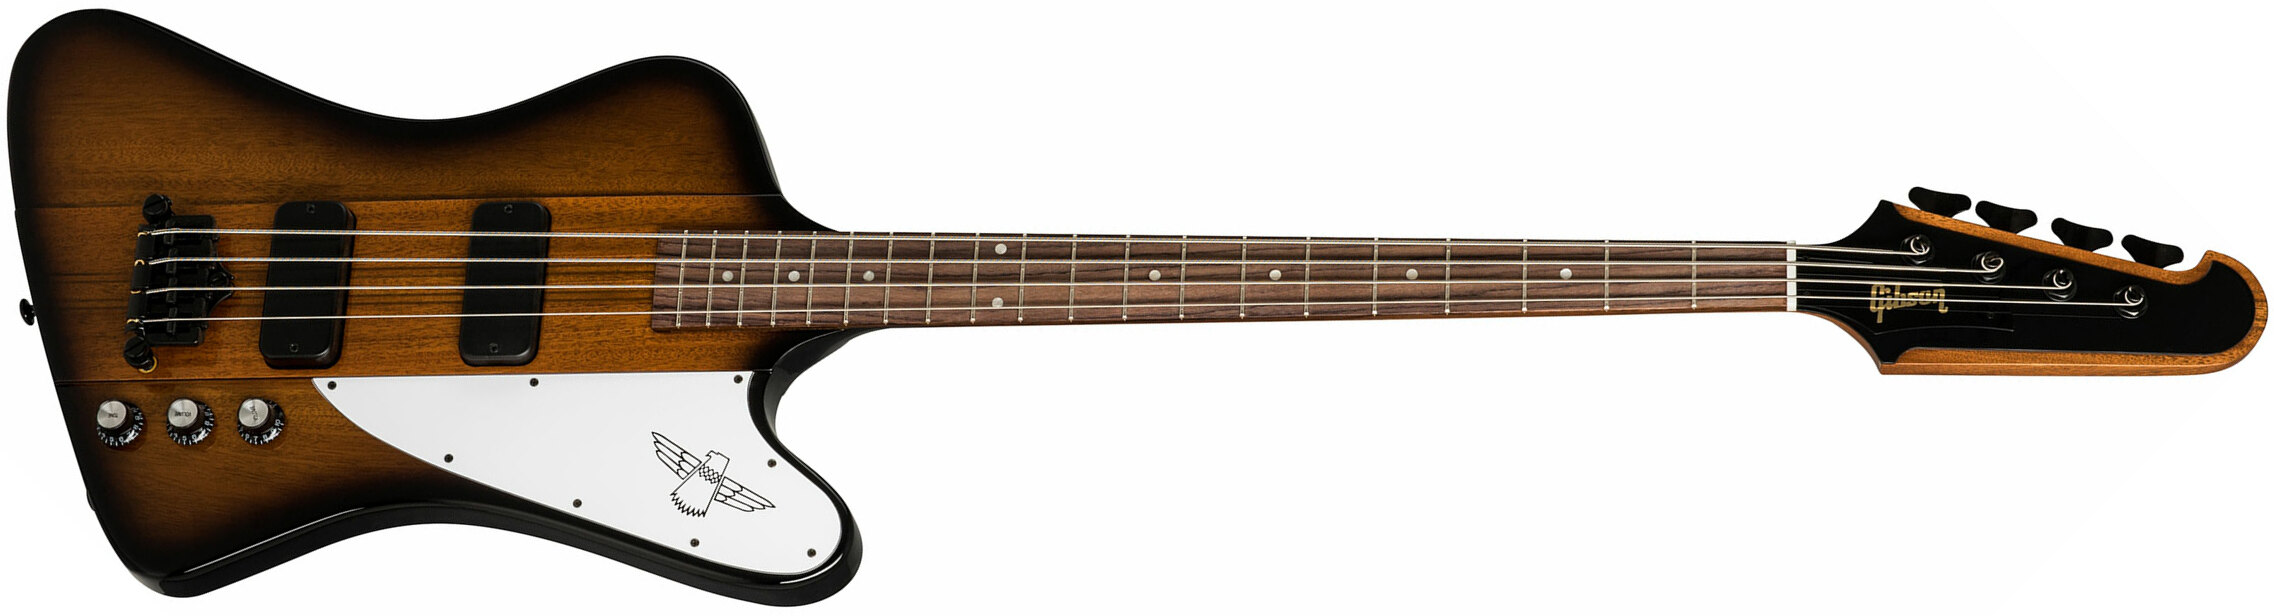 Gibson Thunderbird Bass 2019 - Vintage Sunburst - Basse Électrique Solid Body - Main picture